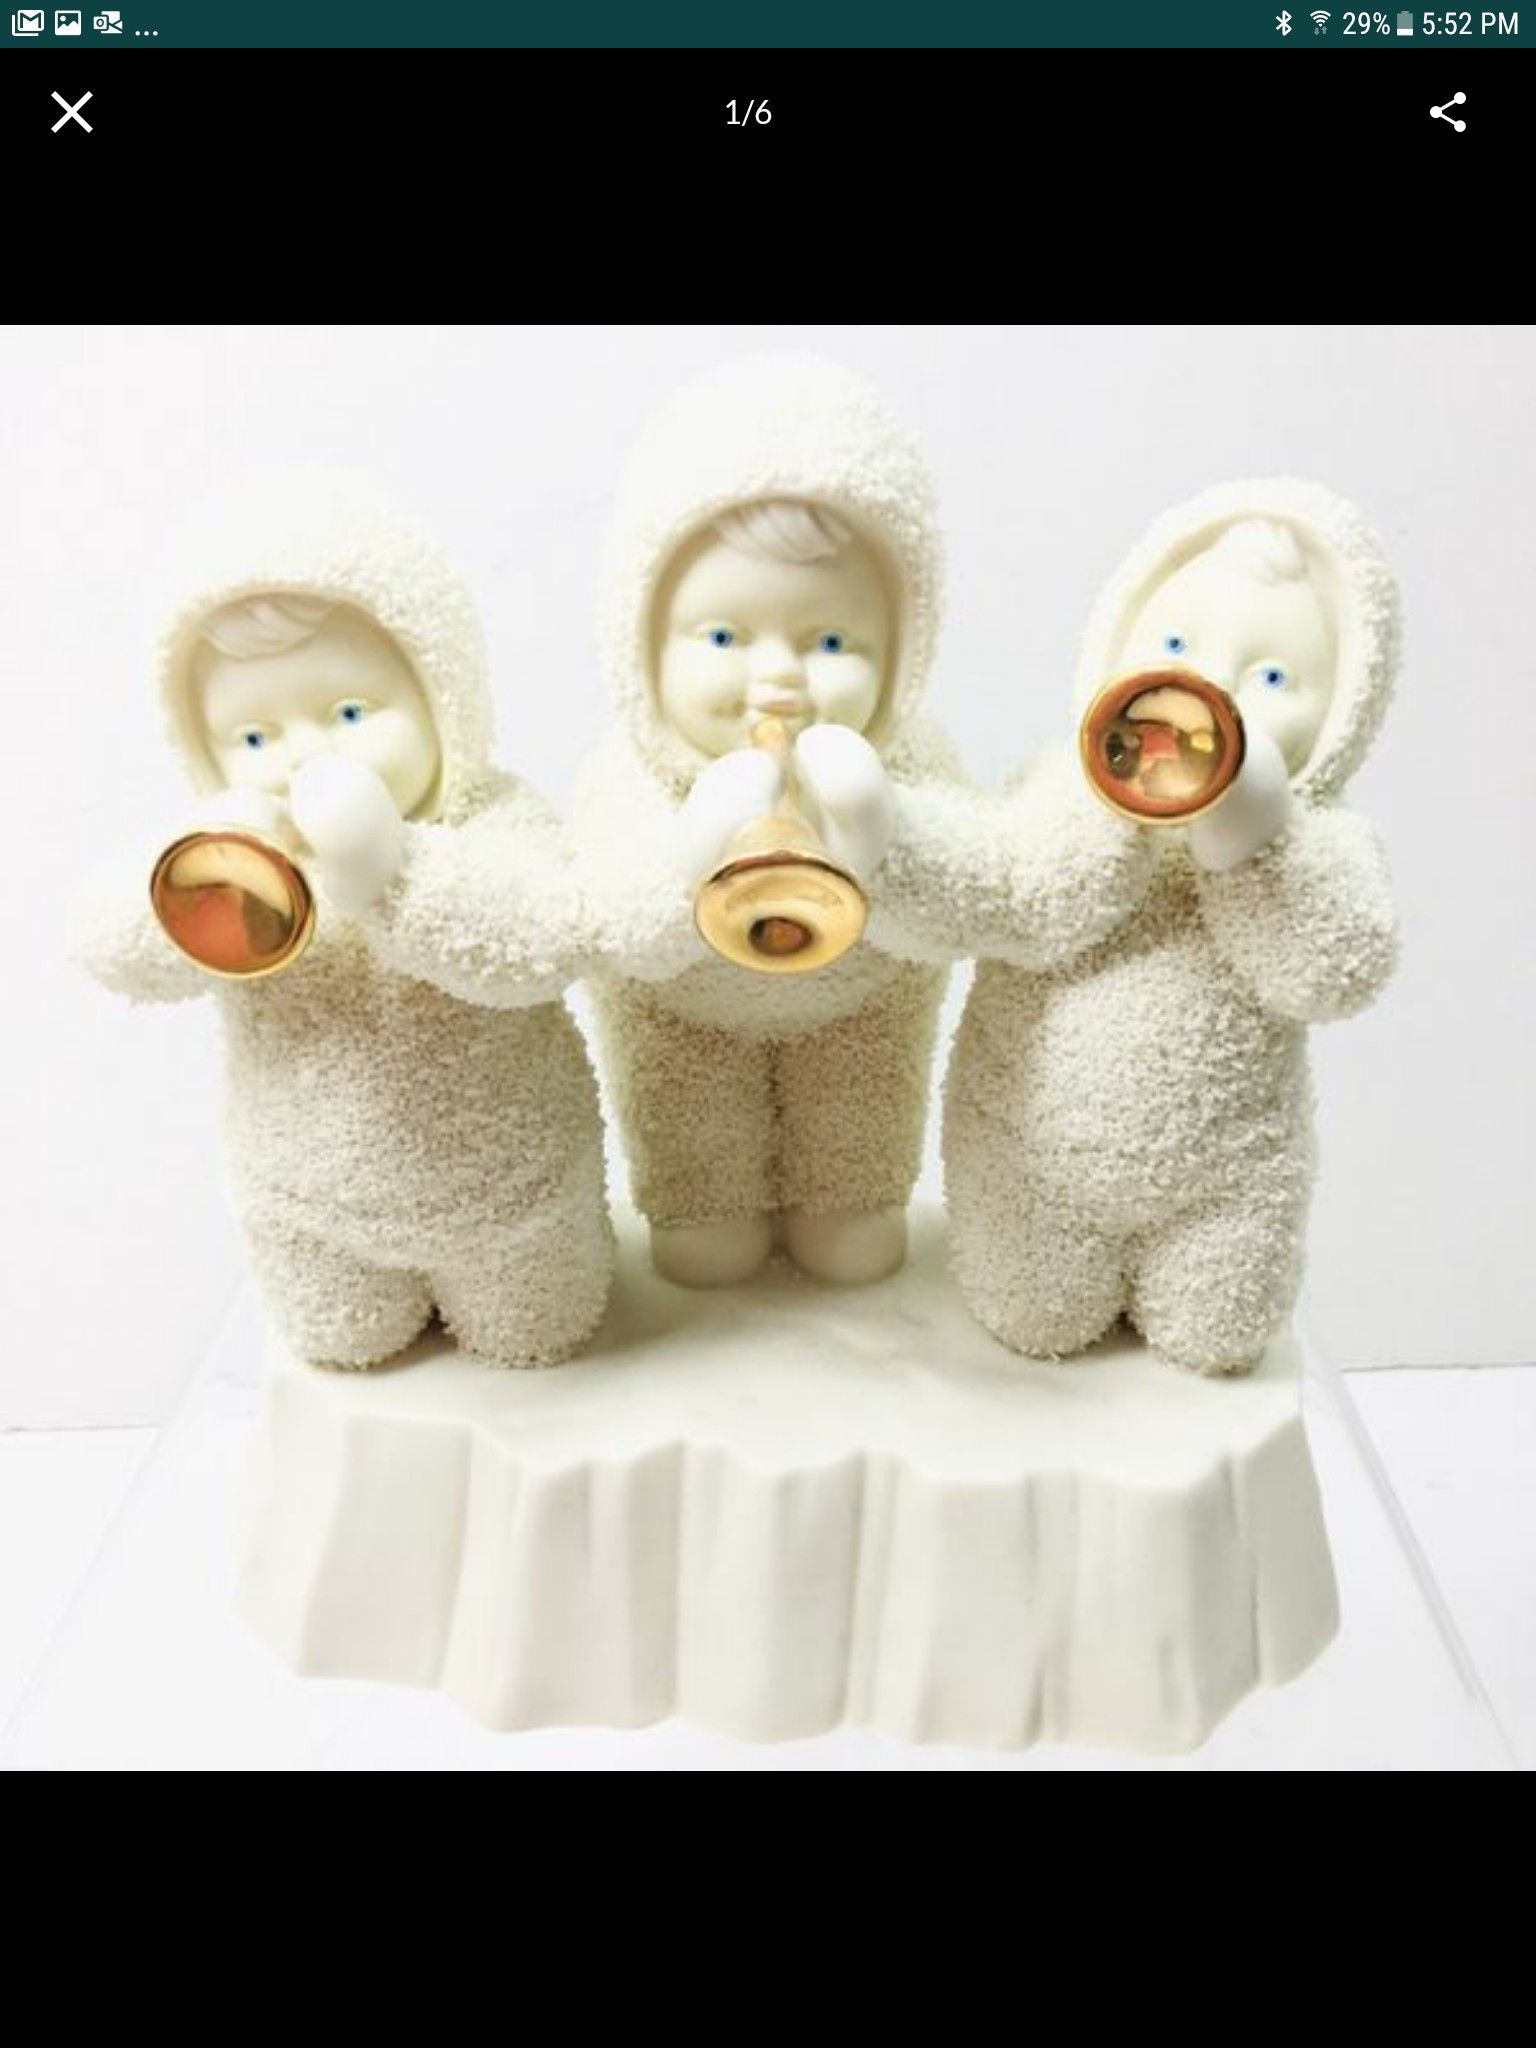 1998 Snowbabies Winter Celebration “Three Tiny Trumpeters” Figurine